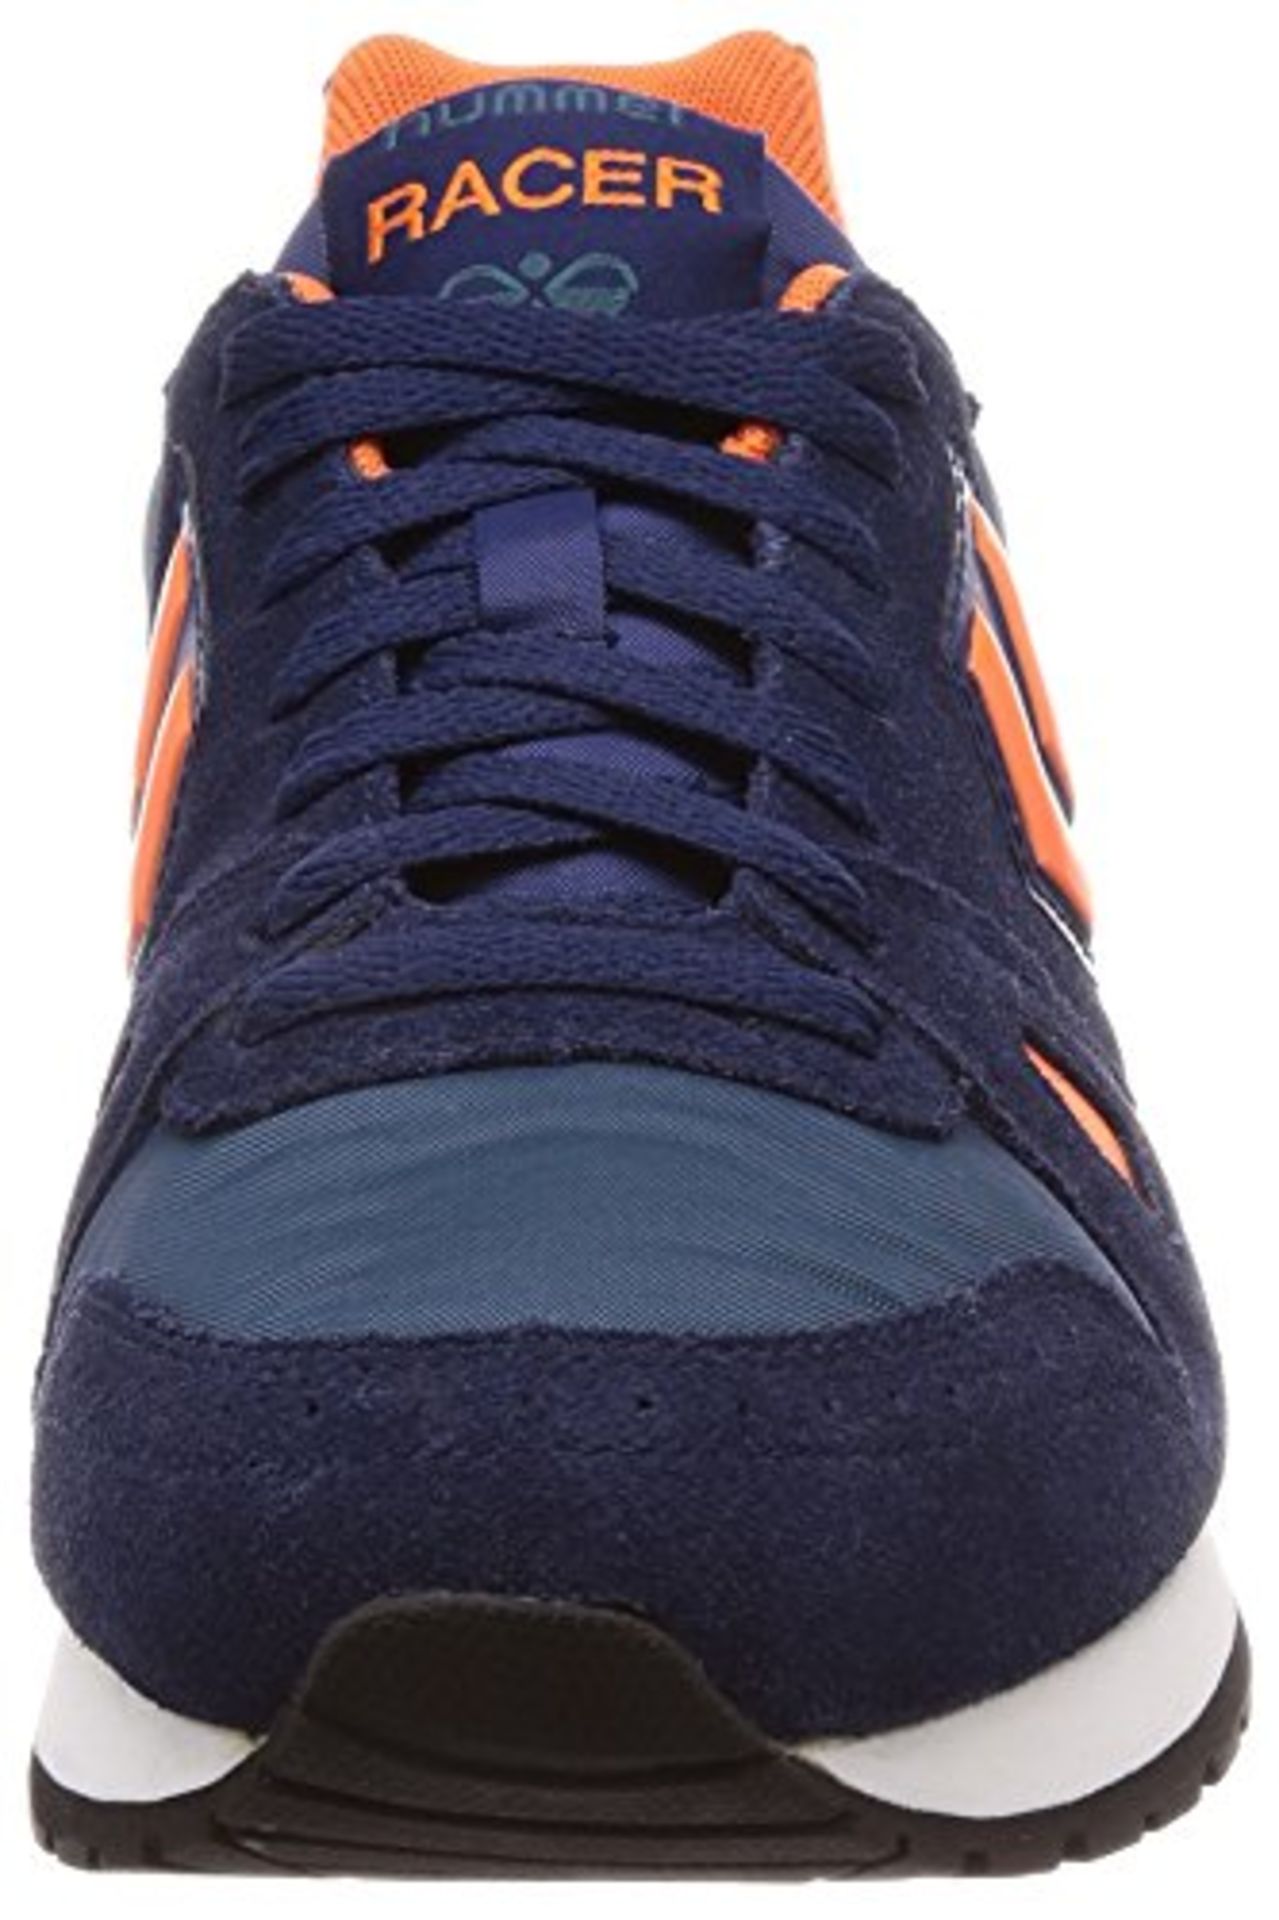 1 x hummel Marathona Trainers Shoes Dark Blue, HM201999, Peacoat, 42 Size: 42 EU | EAN: 57004948785 - Image 4 of 7